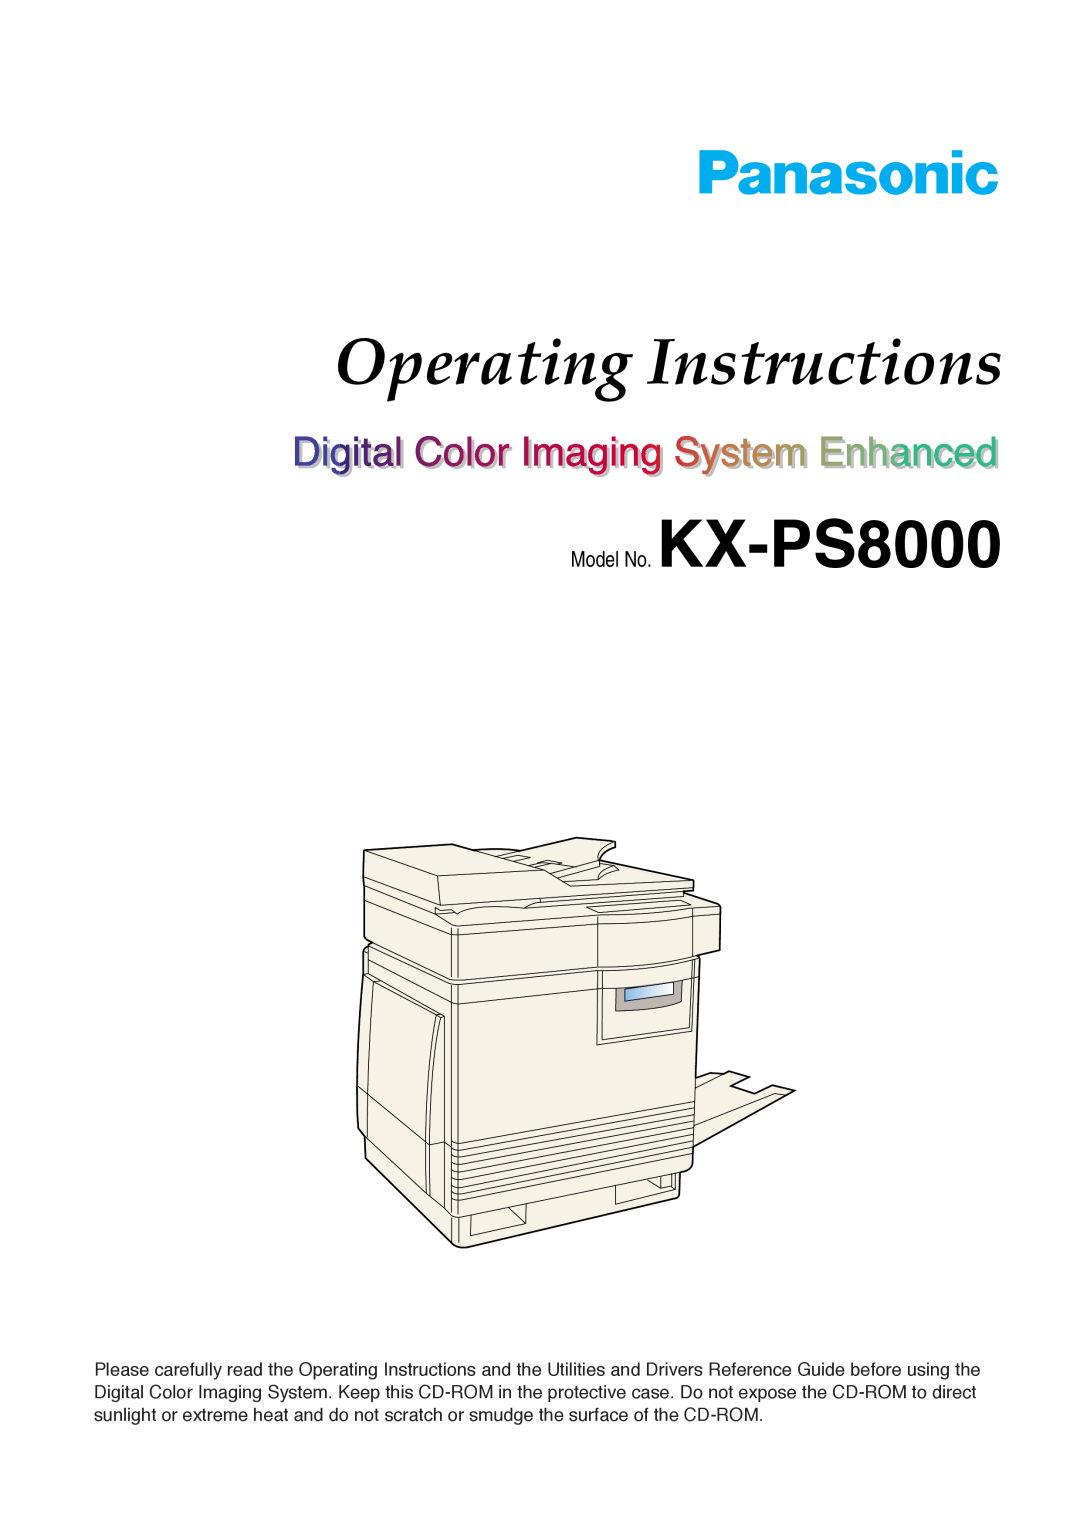 Panasonic manual Model No. KX-PS8000, Operating Instructions 